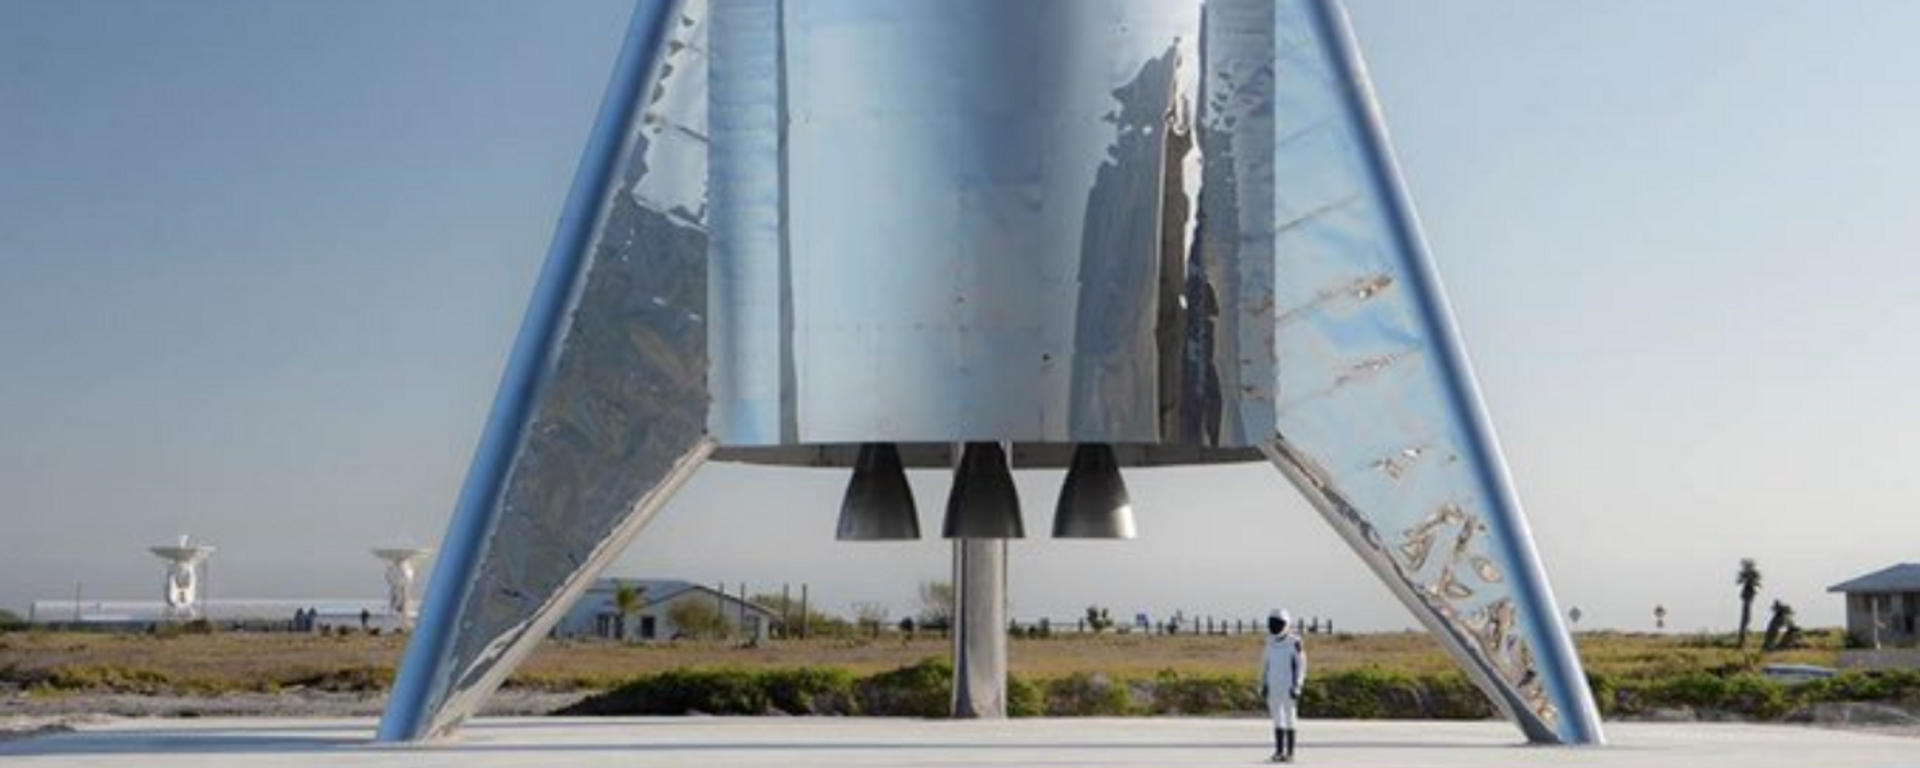 El cohete de SpaceX Starship - Sputnik Mundo, 1920, 29.03.2021